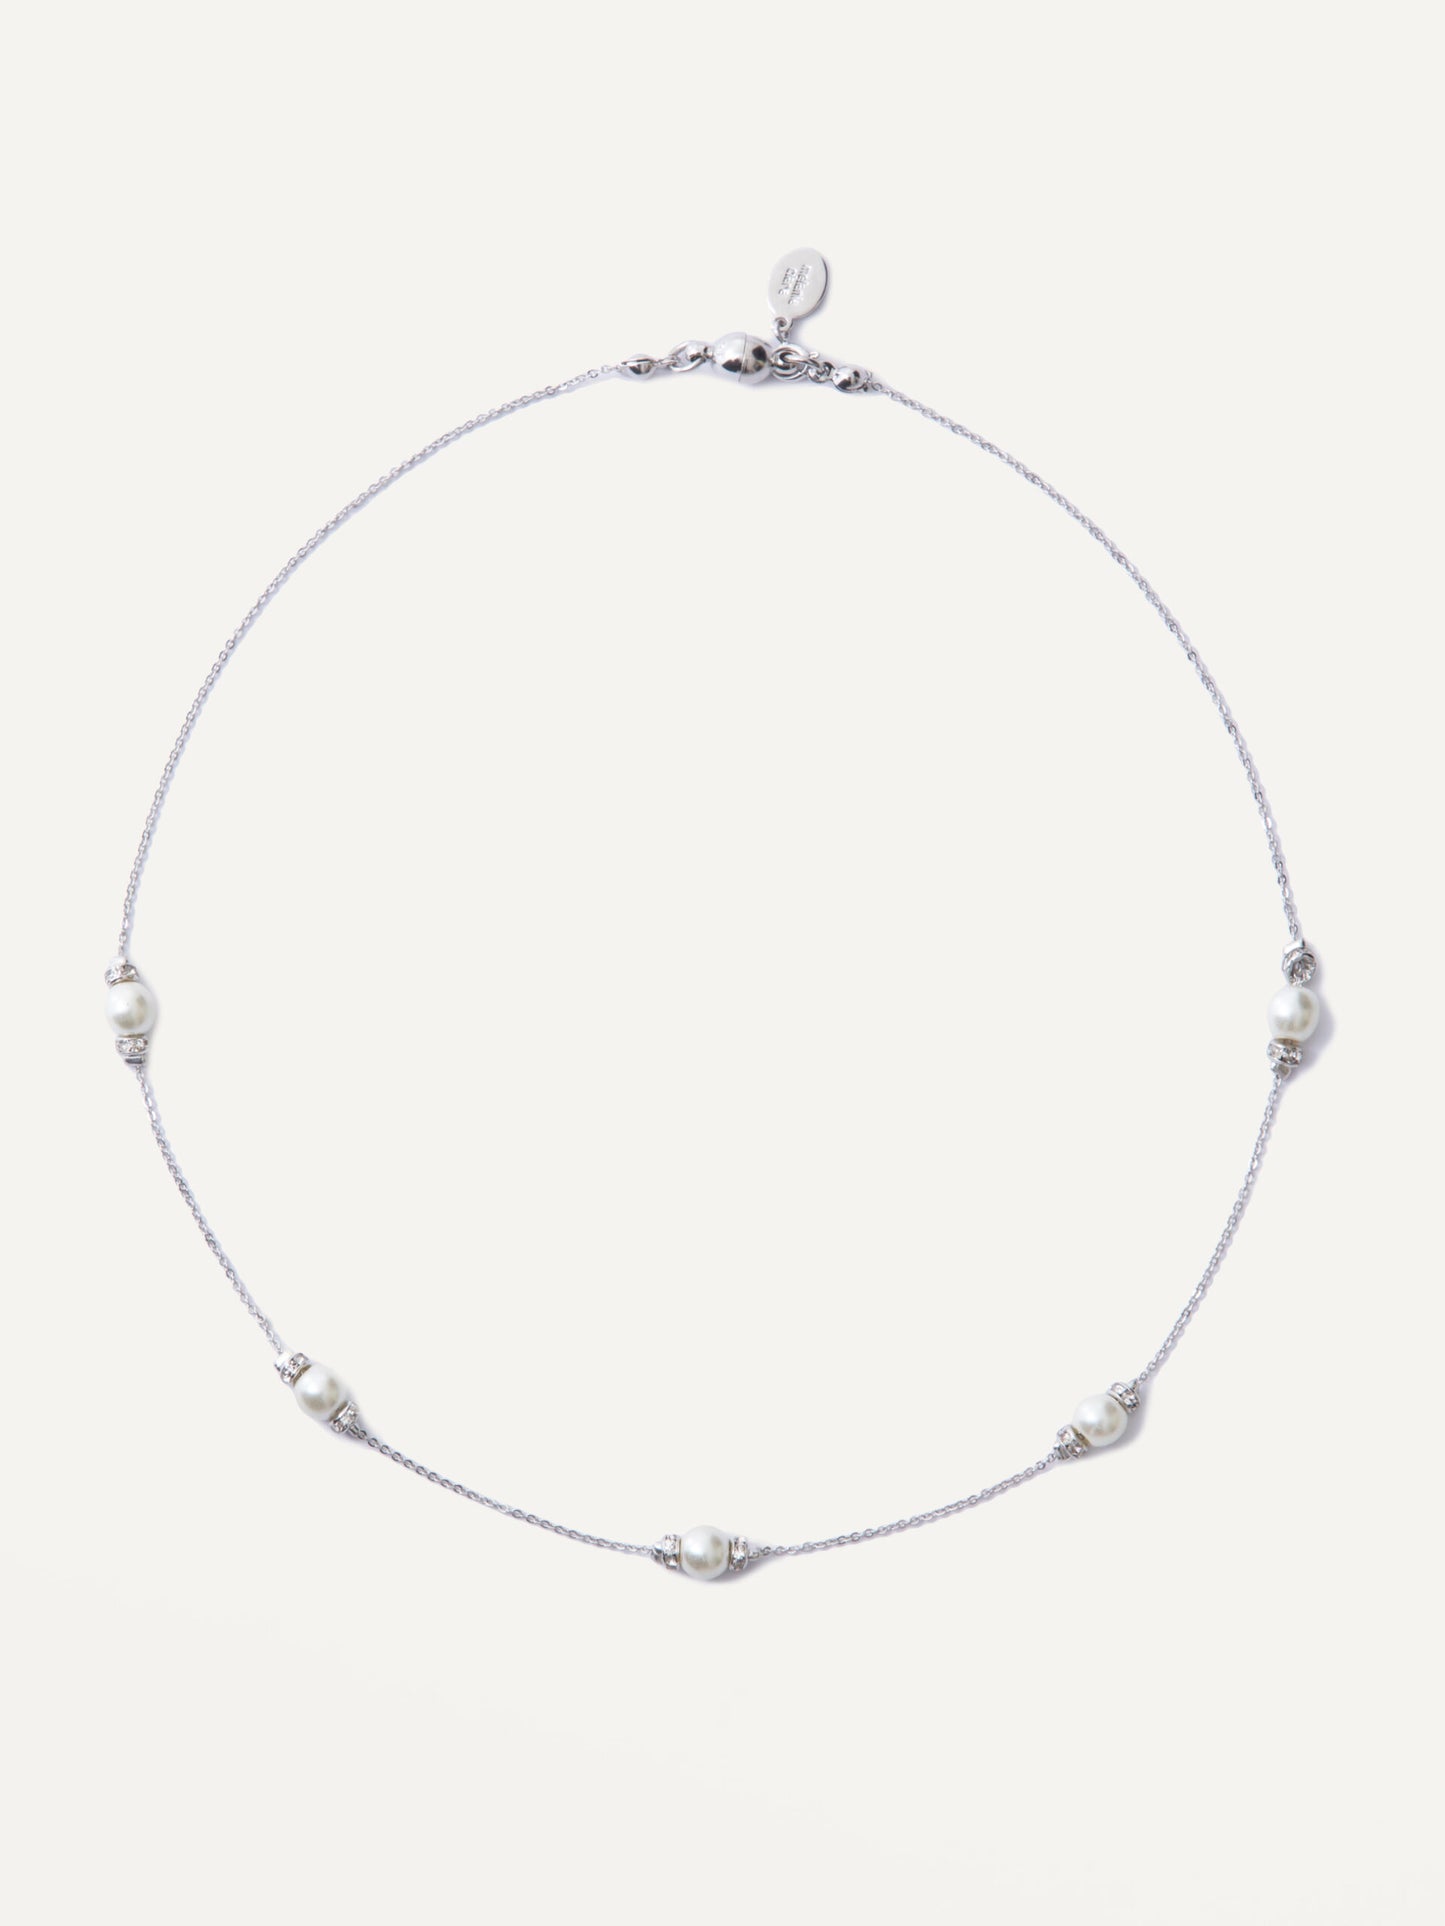 KAI Necklace in Silver